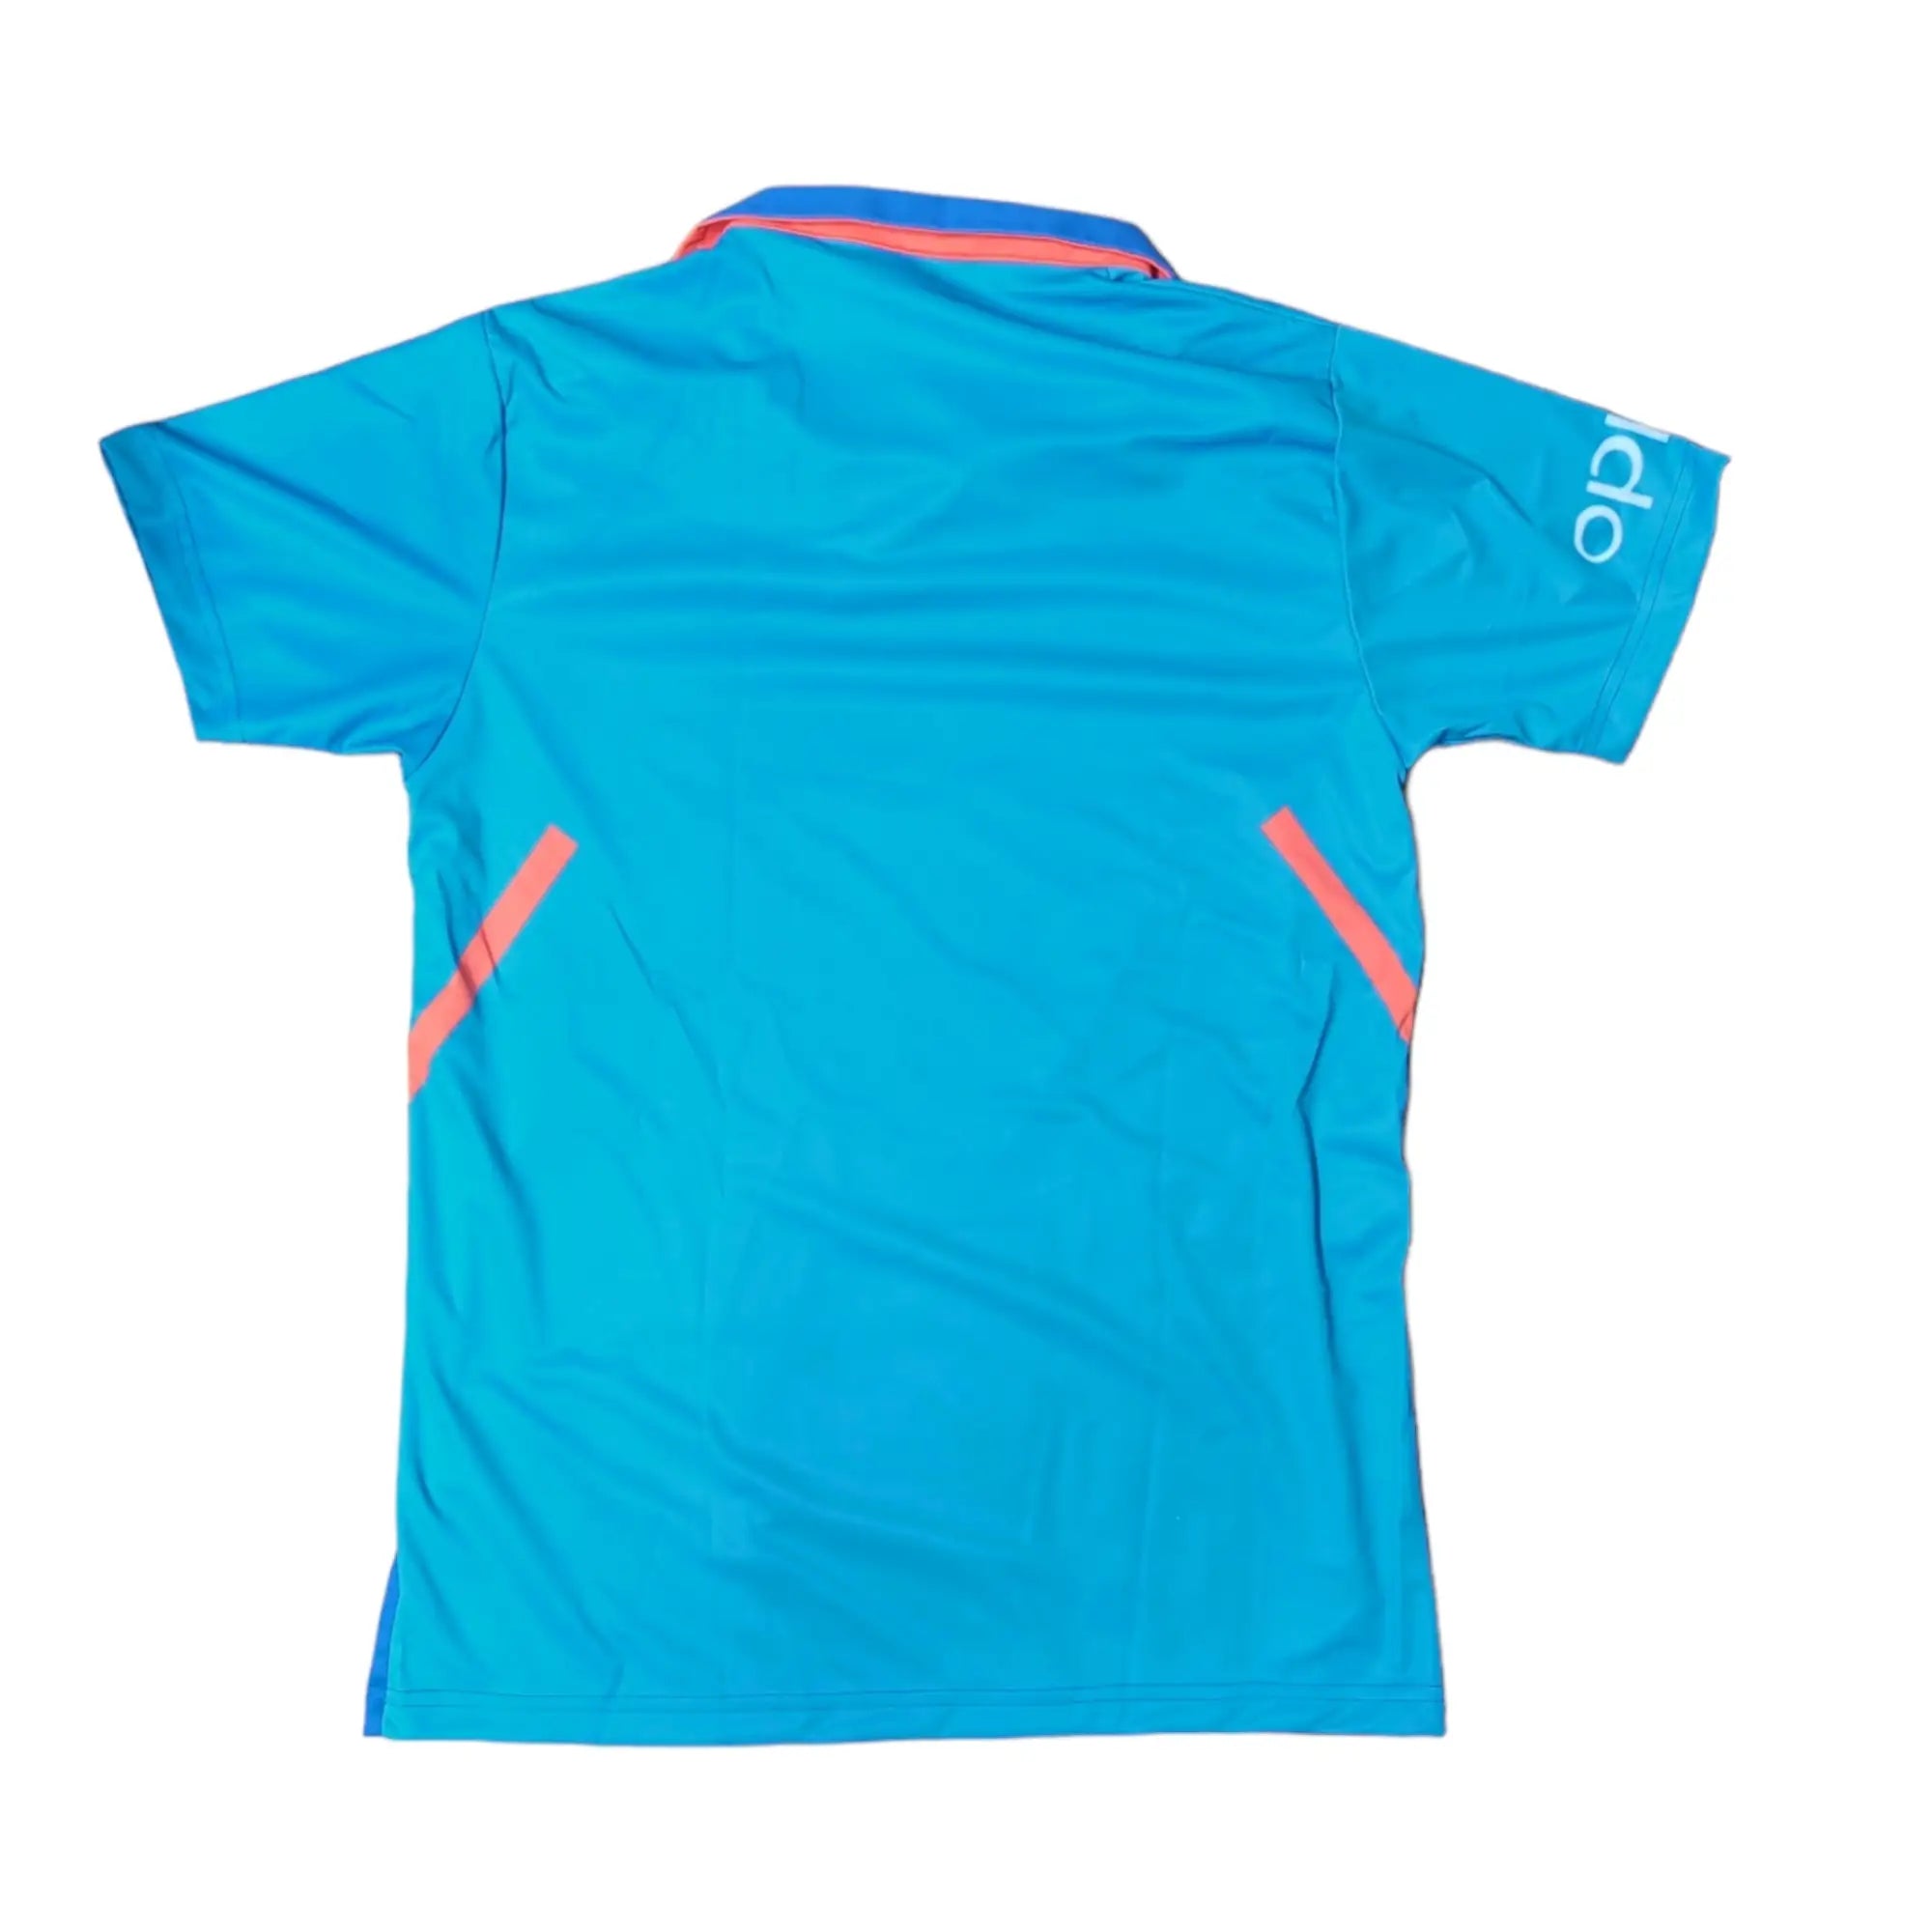 India Cricket Team Jersey Blue - Medium / Blue - Team Shirt